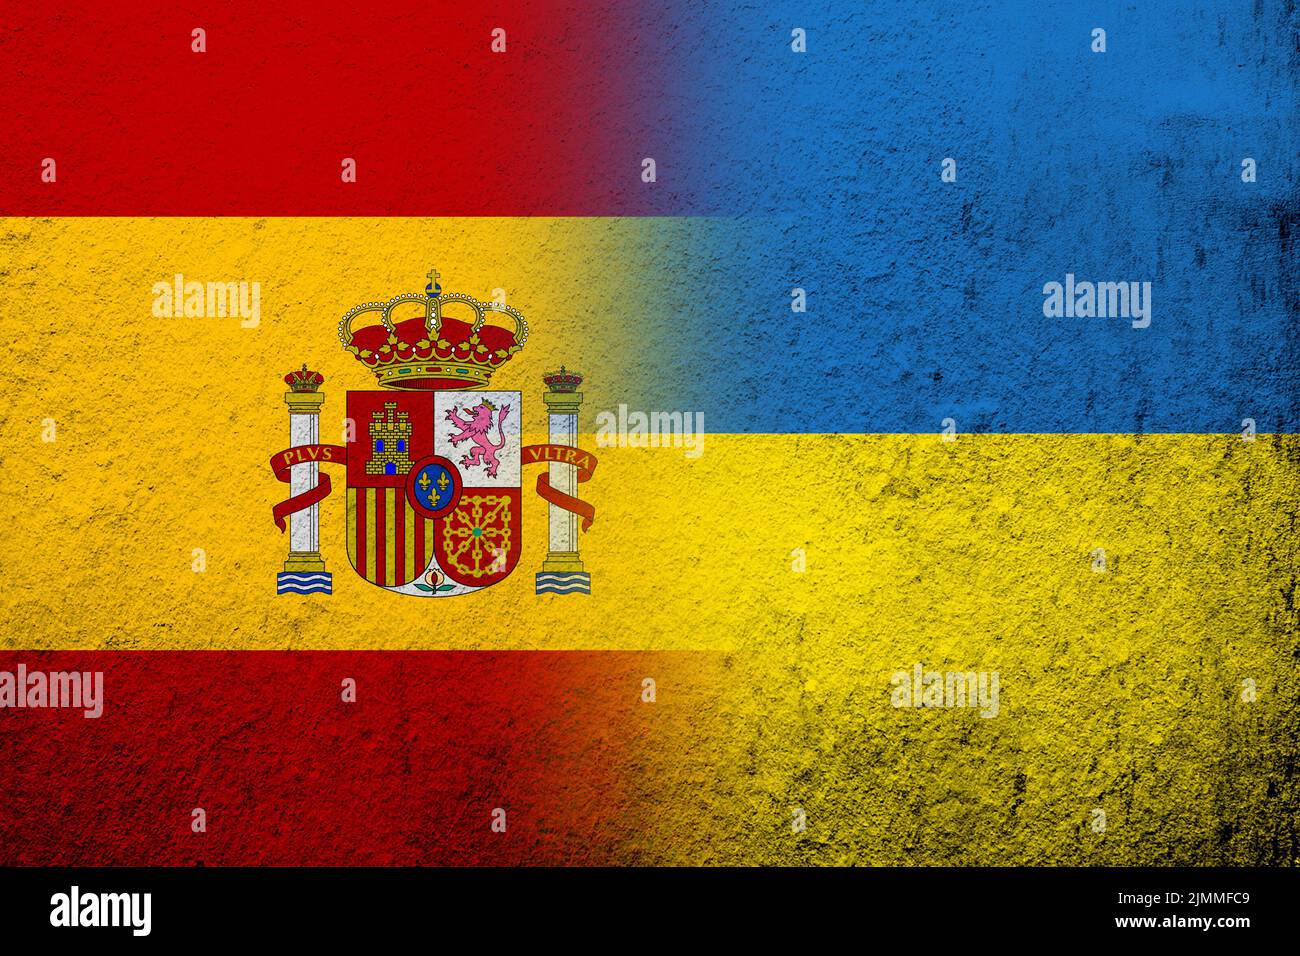 Kingdom of Spain National flag with National flag of Ukraine. Grunge background Stock Photo